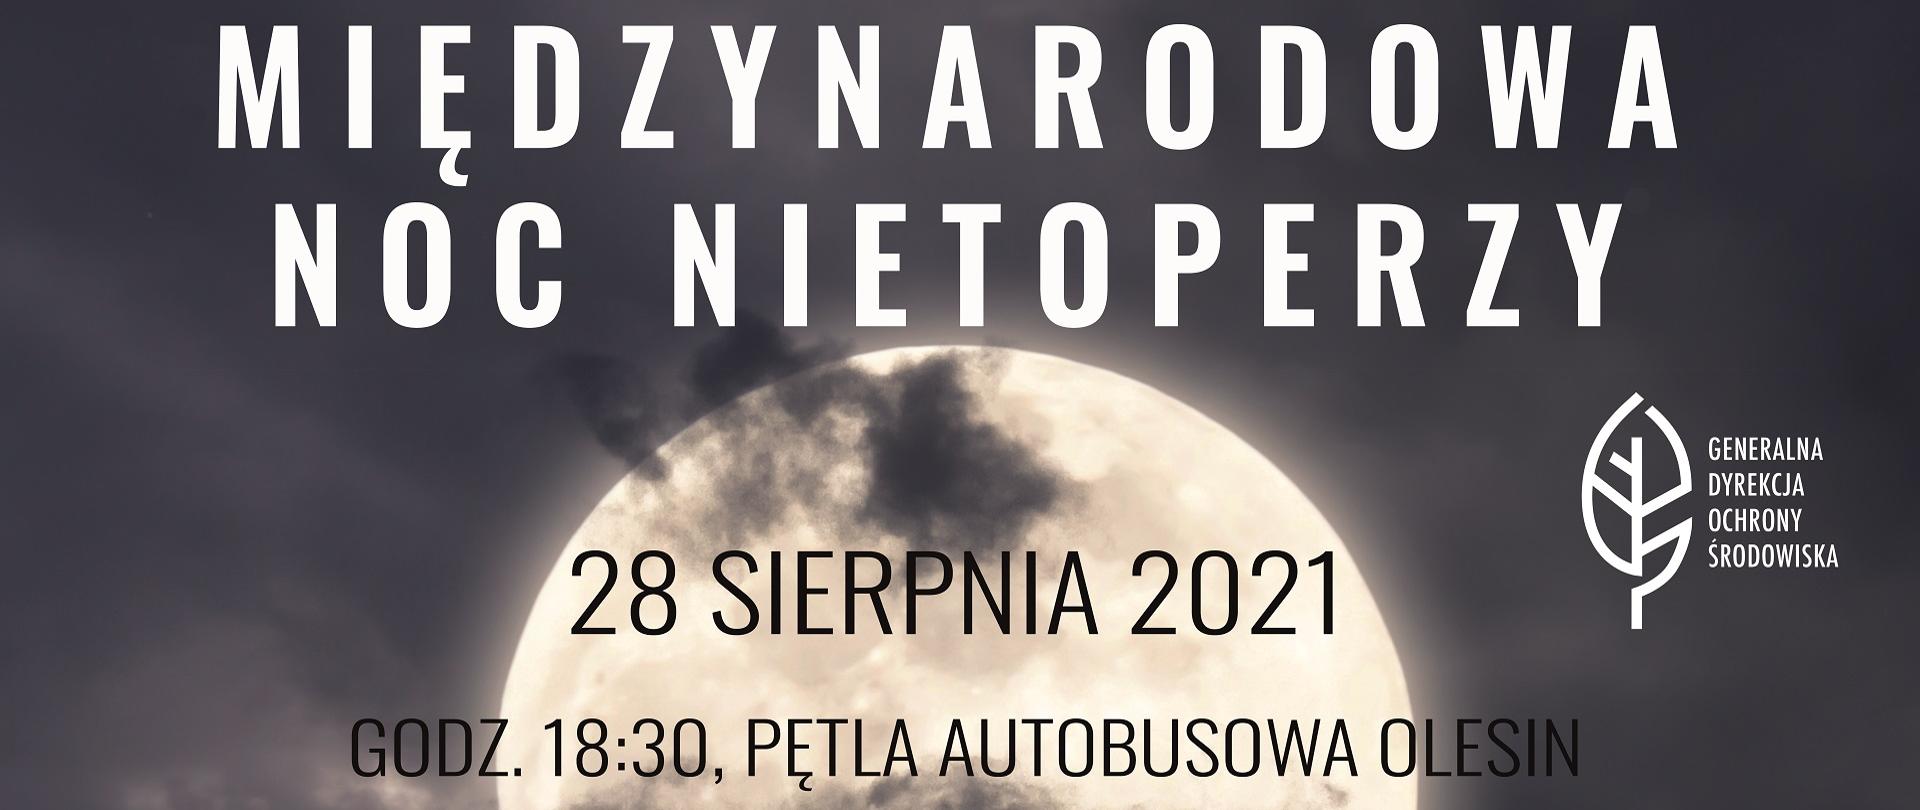 Plakat na Noc Nietoperzy 2021